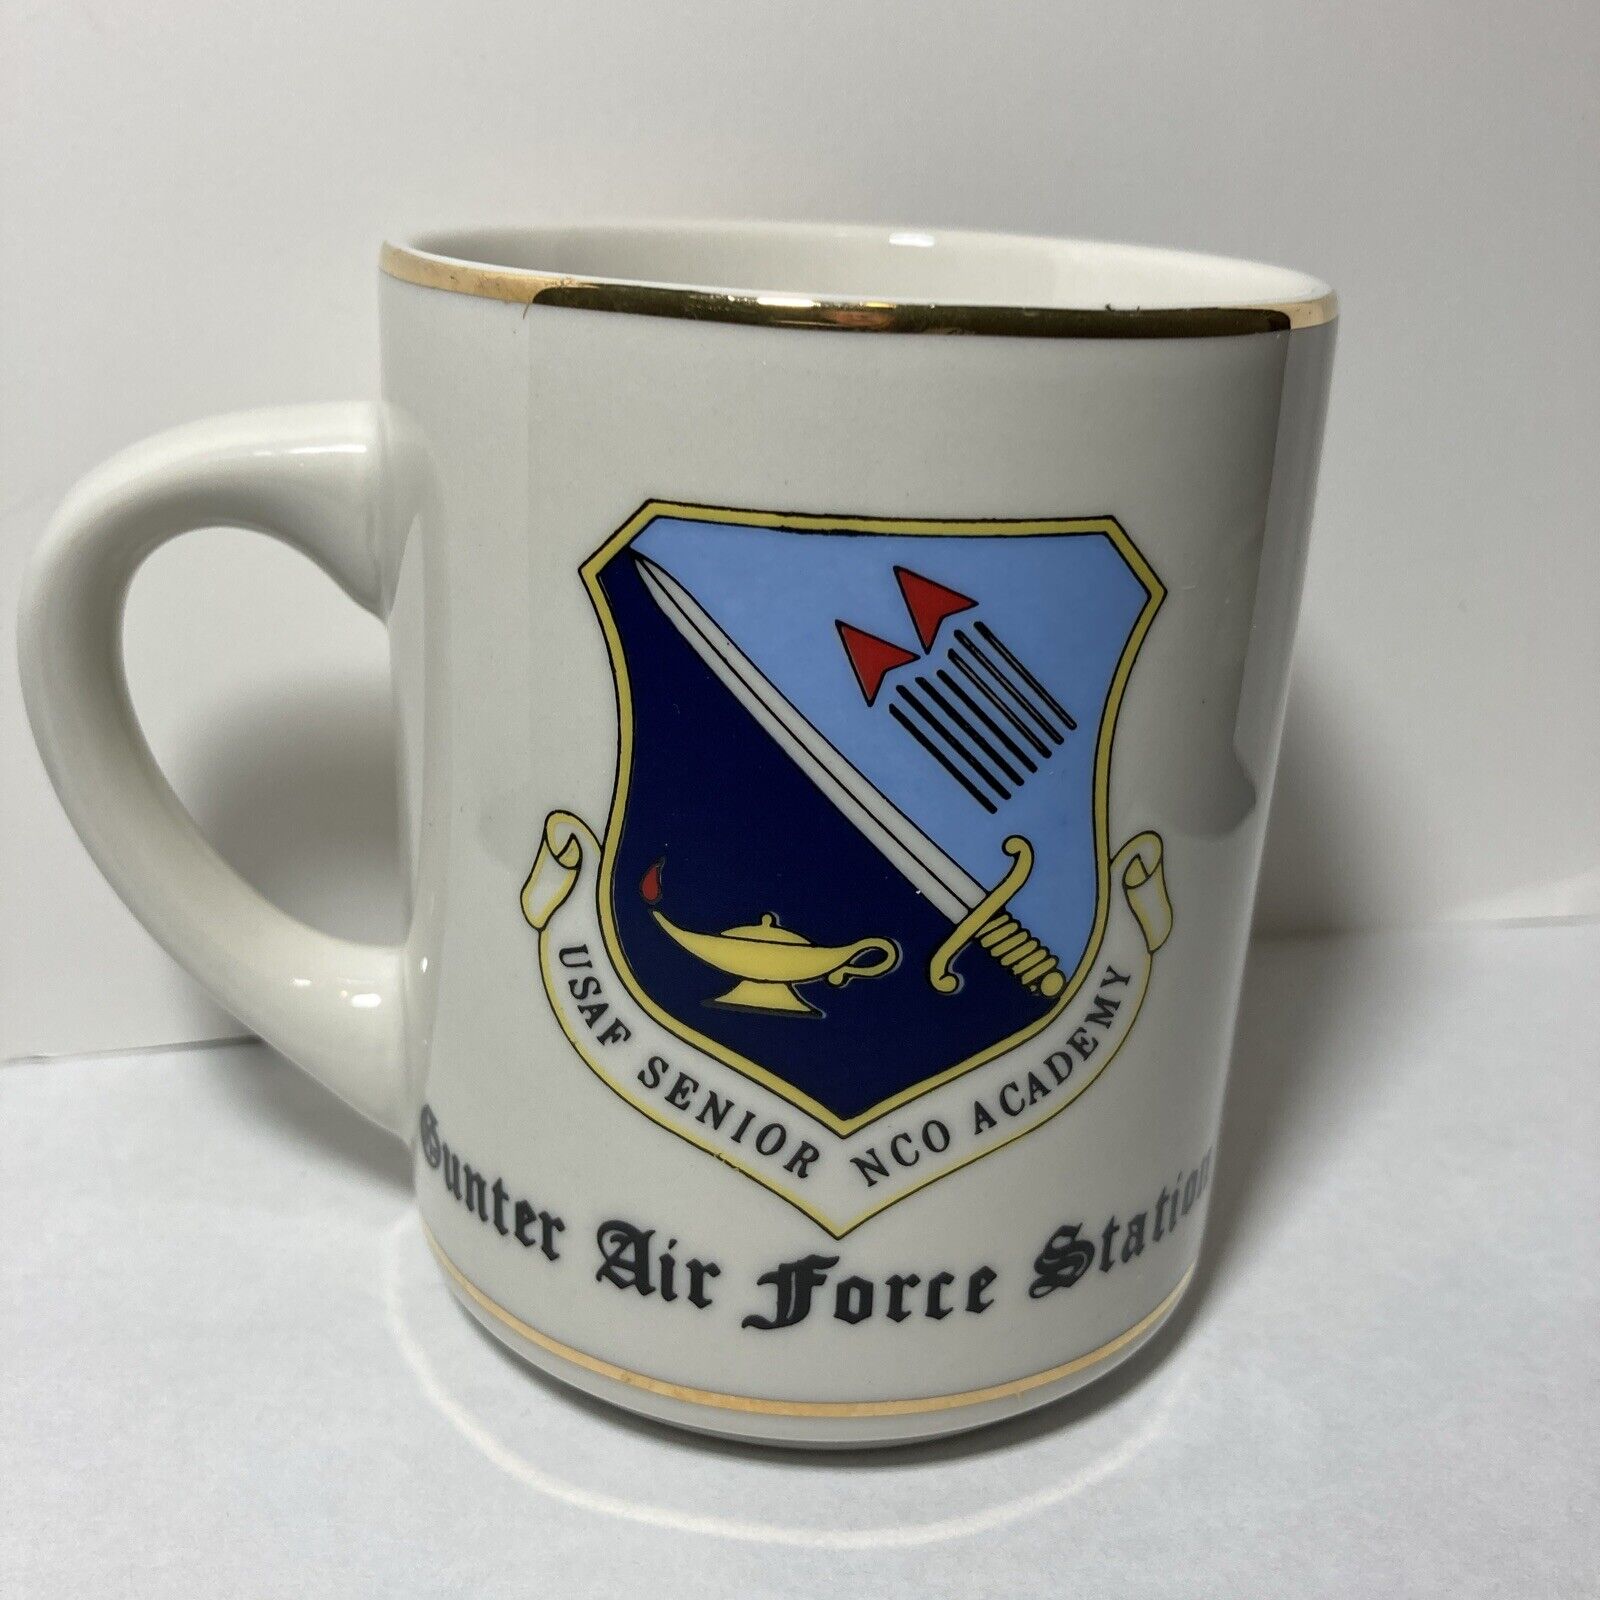 Gunter Air Force Station Mug USAF Senior NCO Academy Vintage Mug Cup USAF